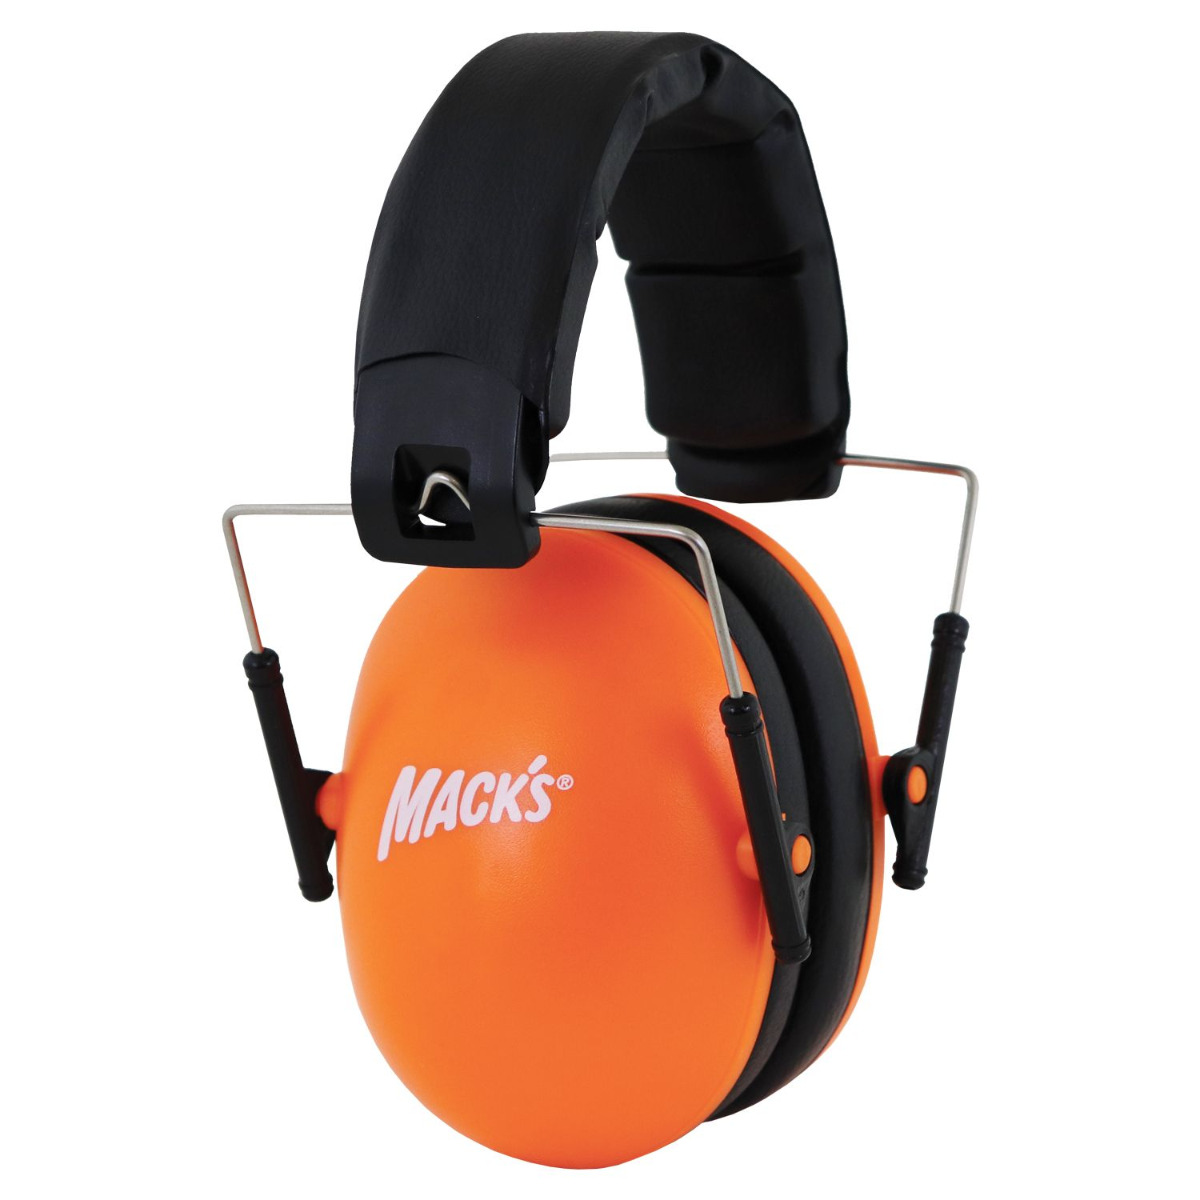 MACKS Kids size sluchátka 1 ks + špunty do uší 1 pár MACKS